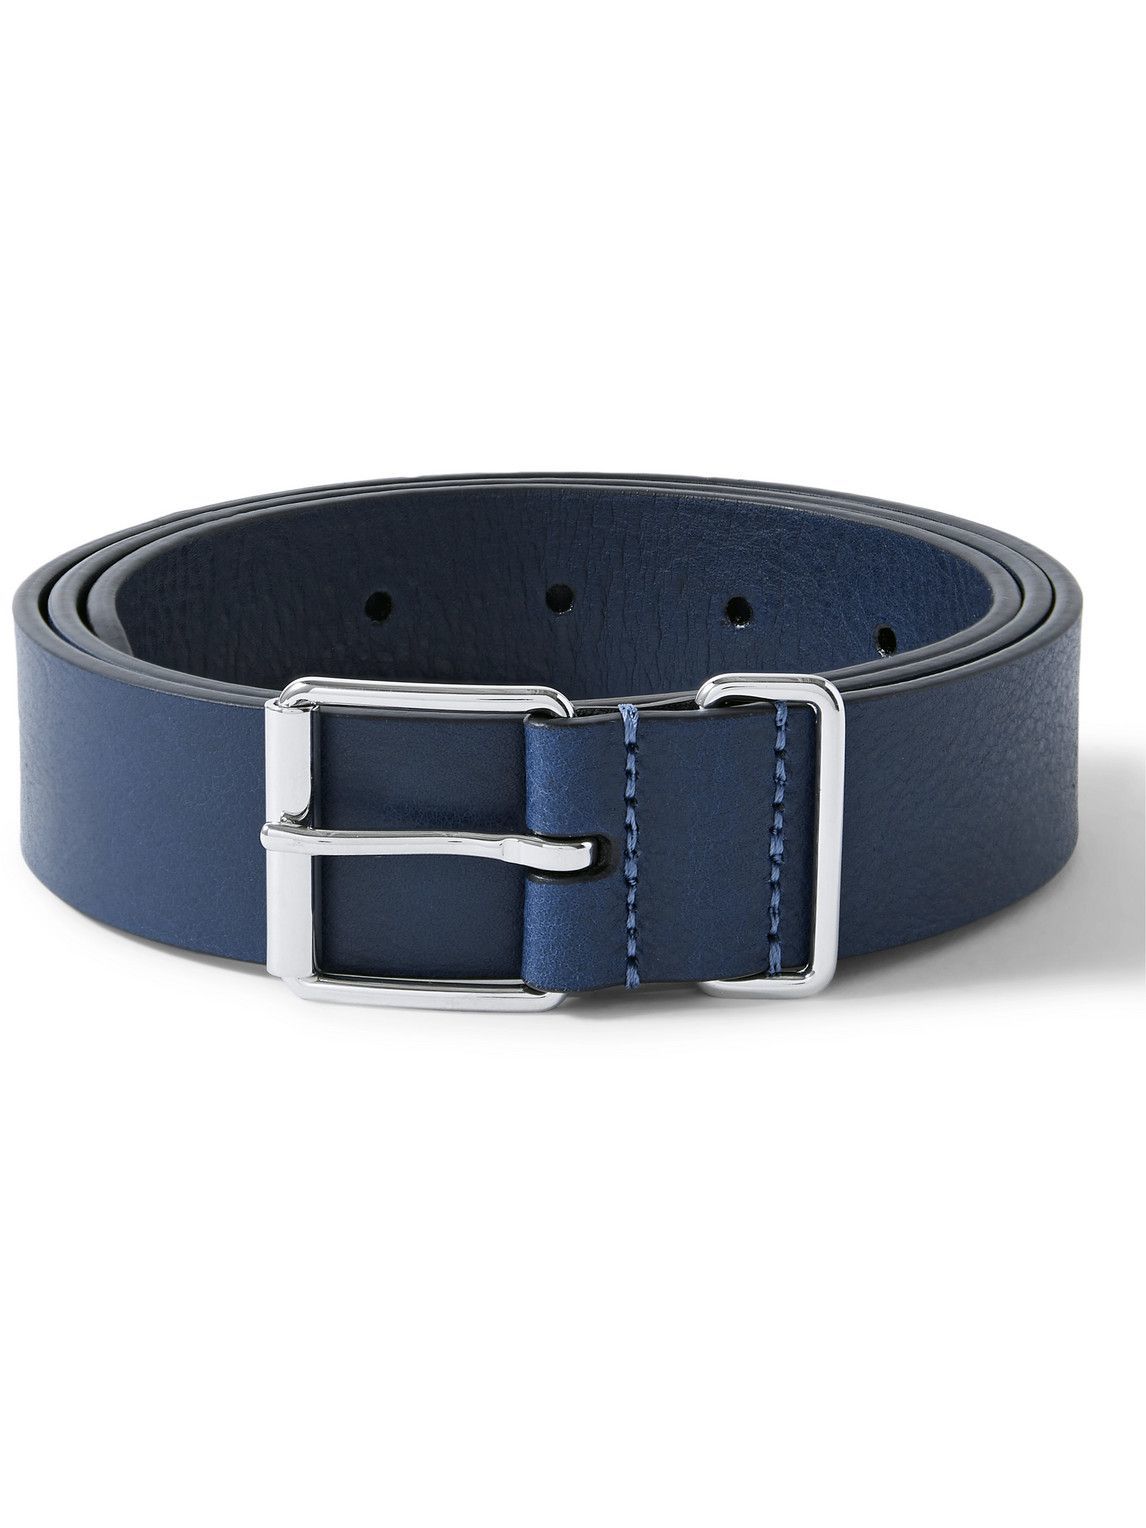 Anderson's - 3cm Full-Grain Leather Belt - Blue Anderson's